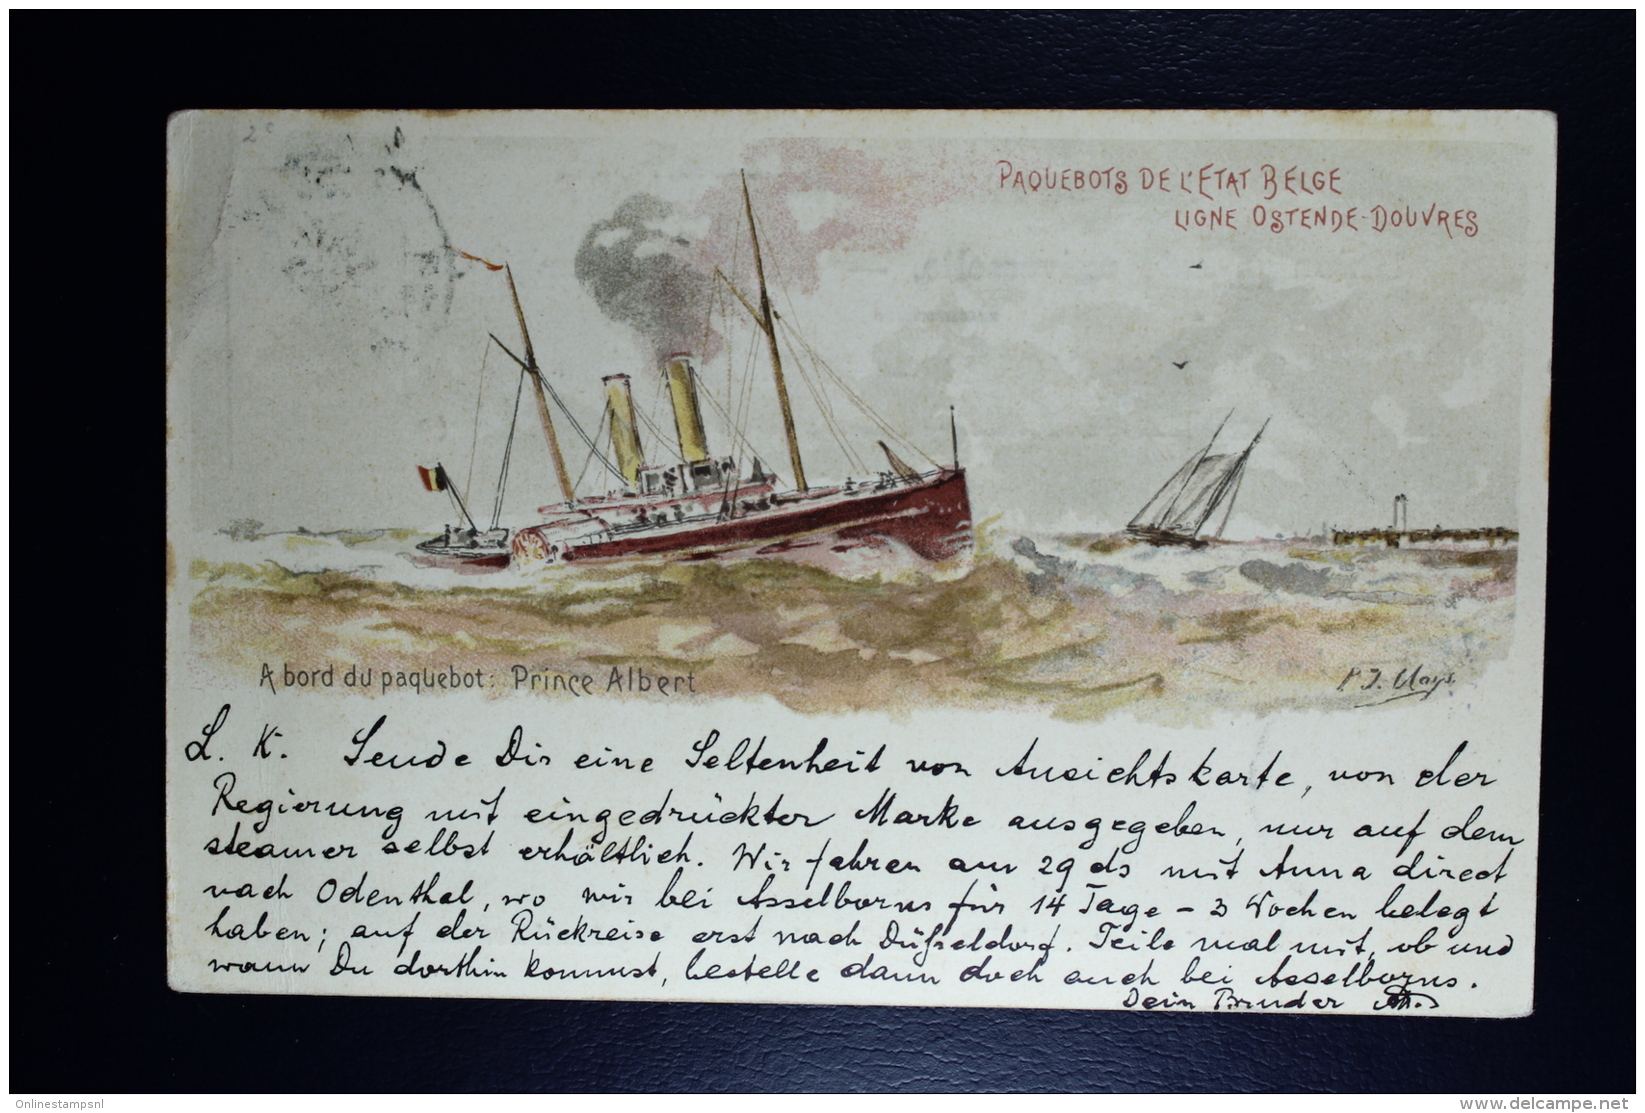 Belgium: 1910  Mi nr SP 2 h*7 + R*4   used  Postkarten für Fahrschiffen Pakketboot kaarten Paquetbot cartes